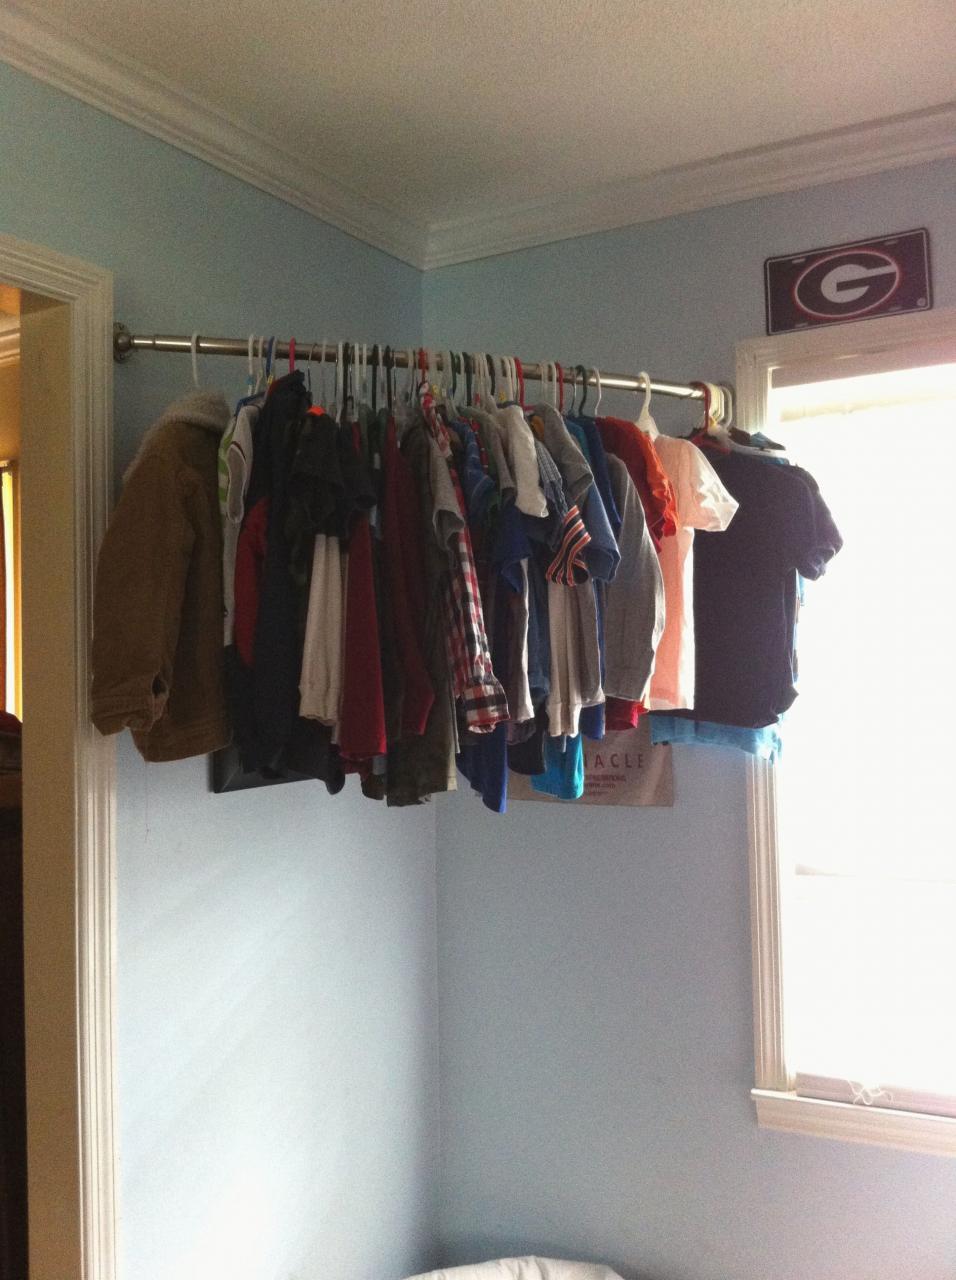 Diy Laundry Room Shelf With Hanging Rod / Top Laundry Room Ideas Shelf